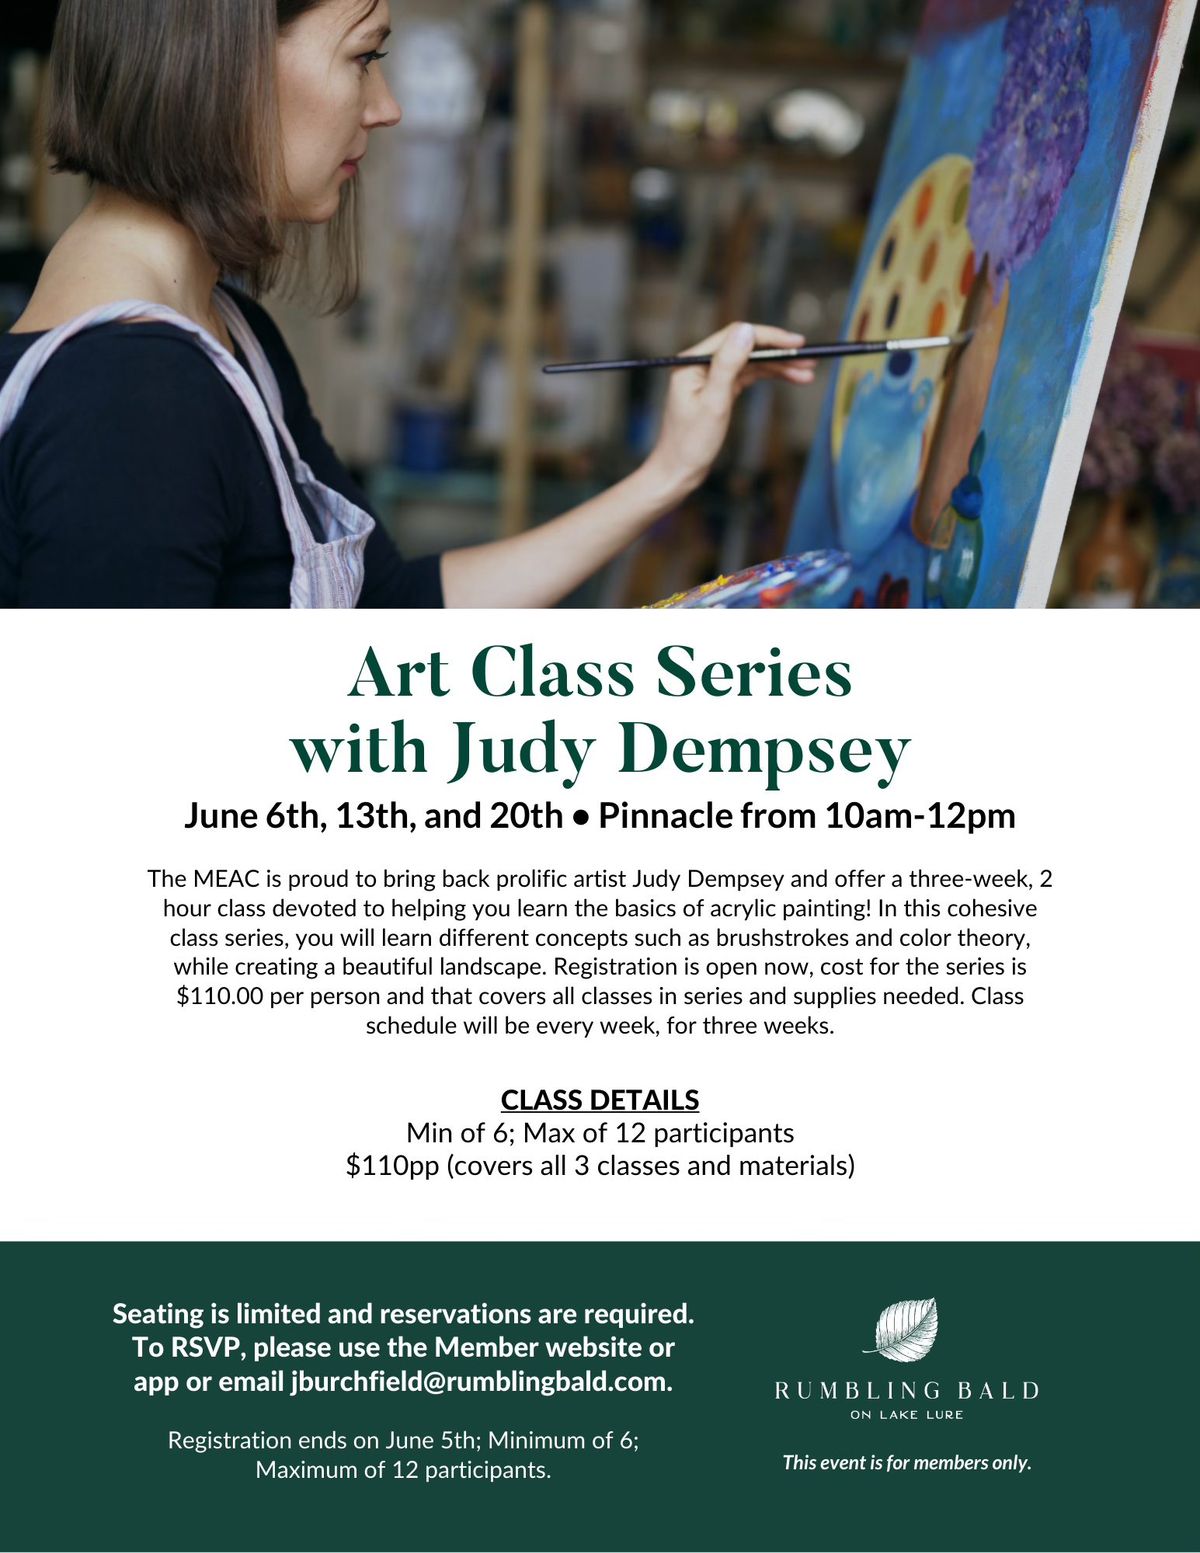 Art Class Series with Judy Dempsey